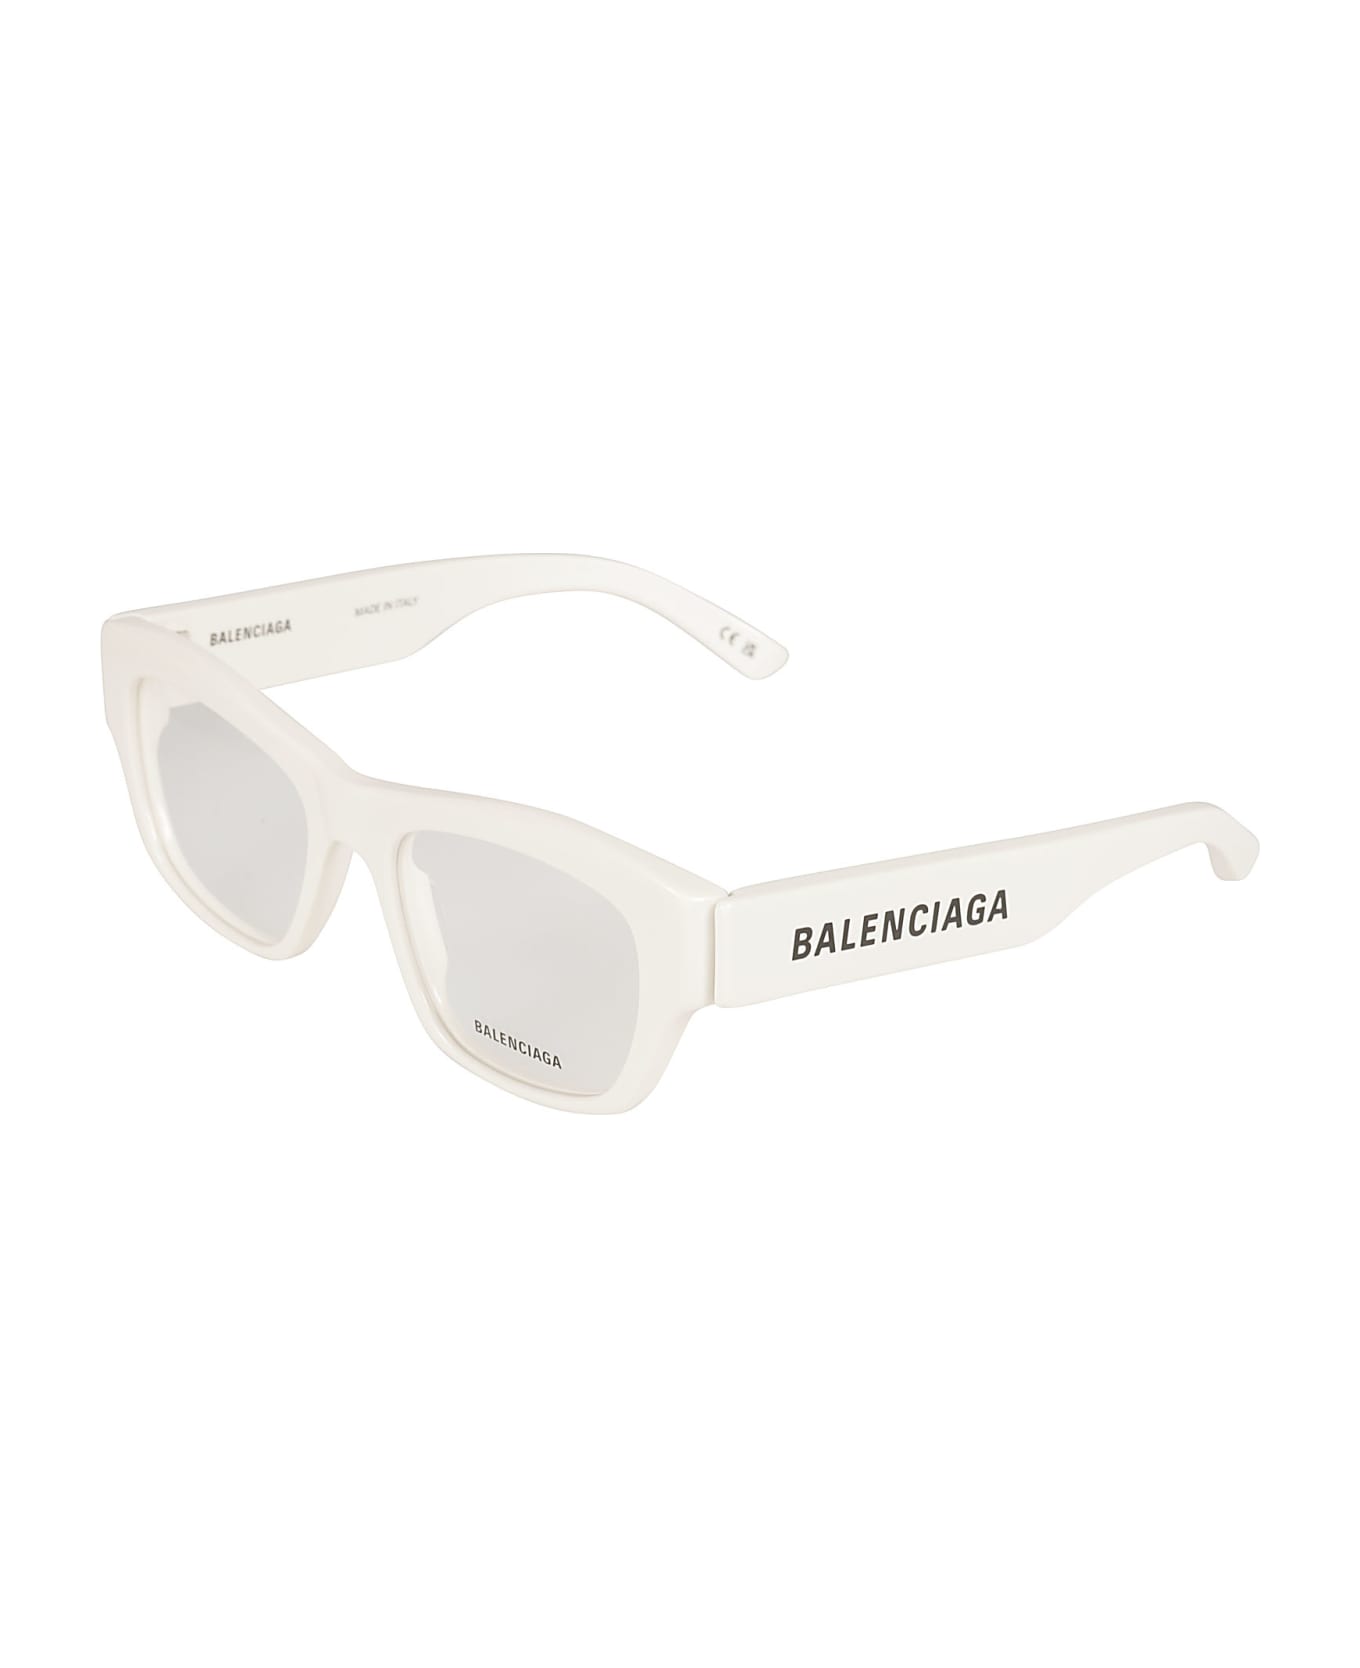 Balenciaga Eyewear Square Frame Logo Sided Glasses - White/Transparent